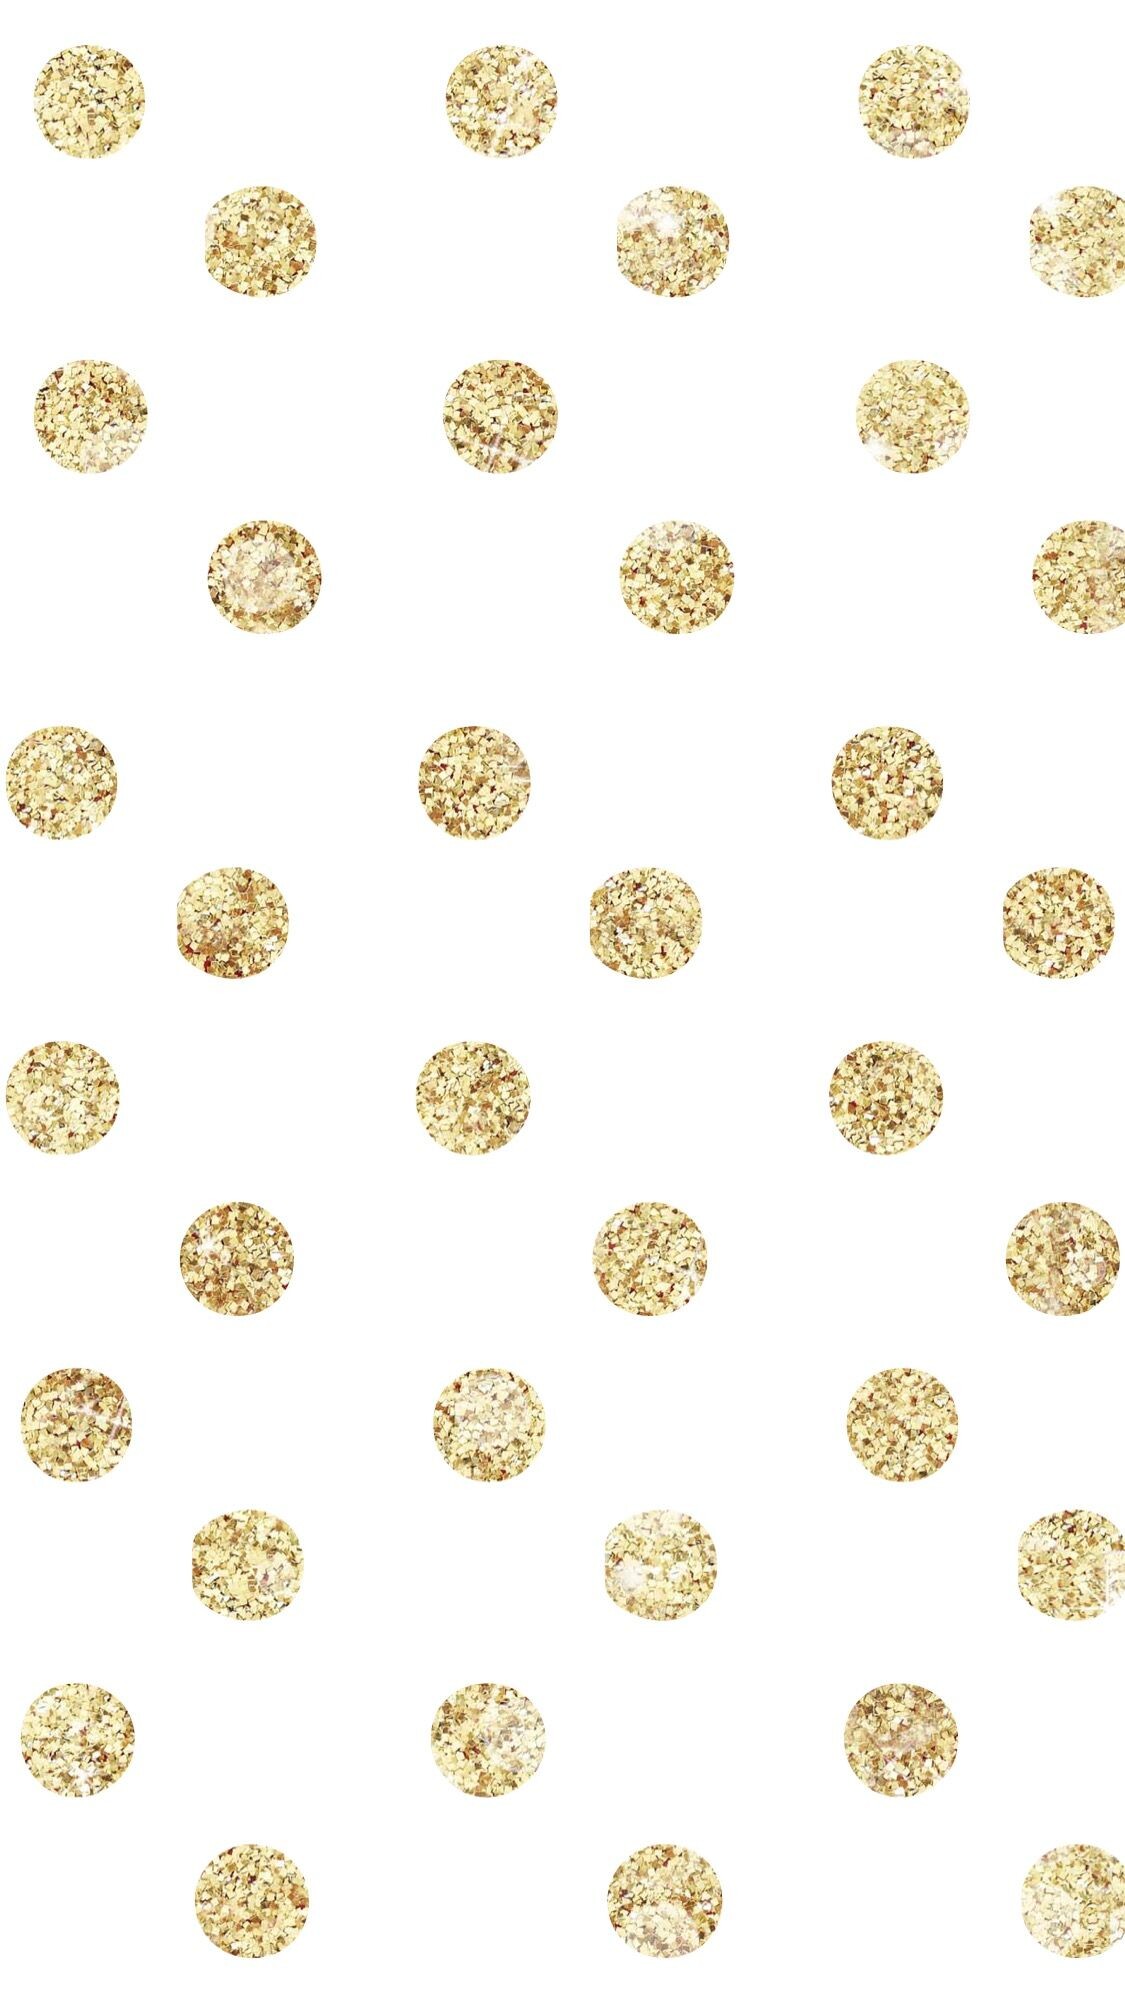 Gold Dots: Glittering dots, Diagonal repeat layout, Shining confetti, Glittering metallic powder. 1130x2010 HD Wallpaper.